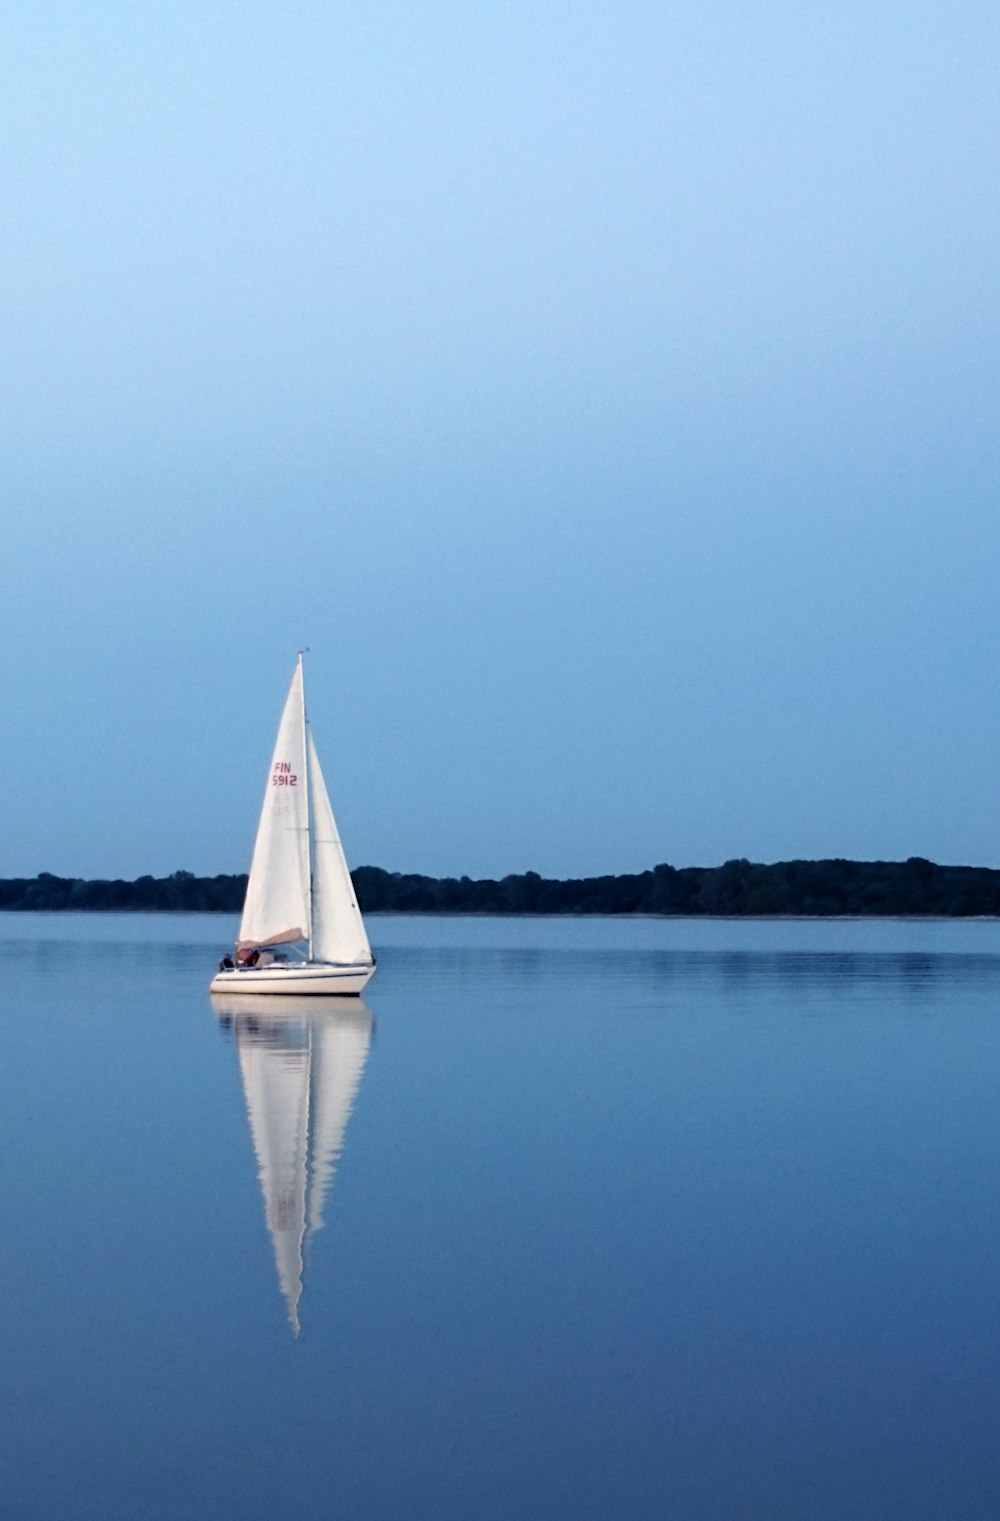 a sailboat is sailing on a calm lake